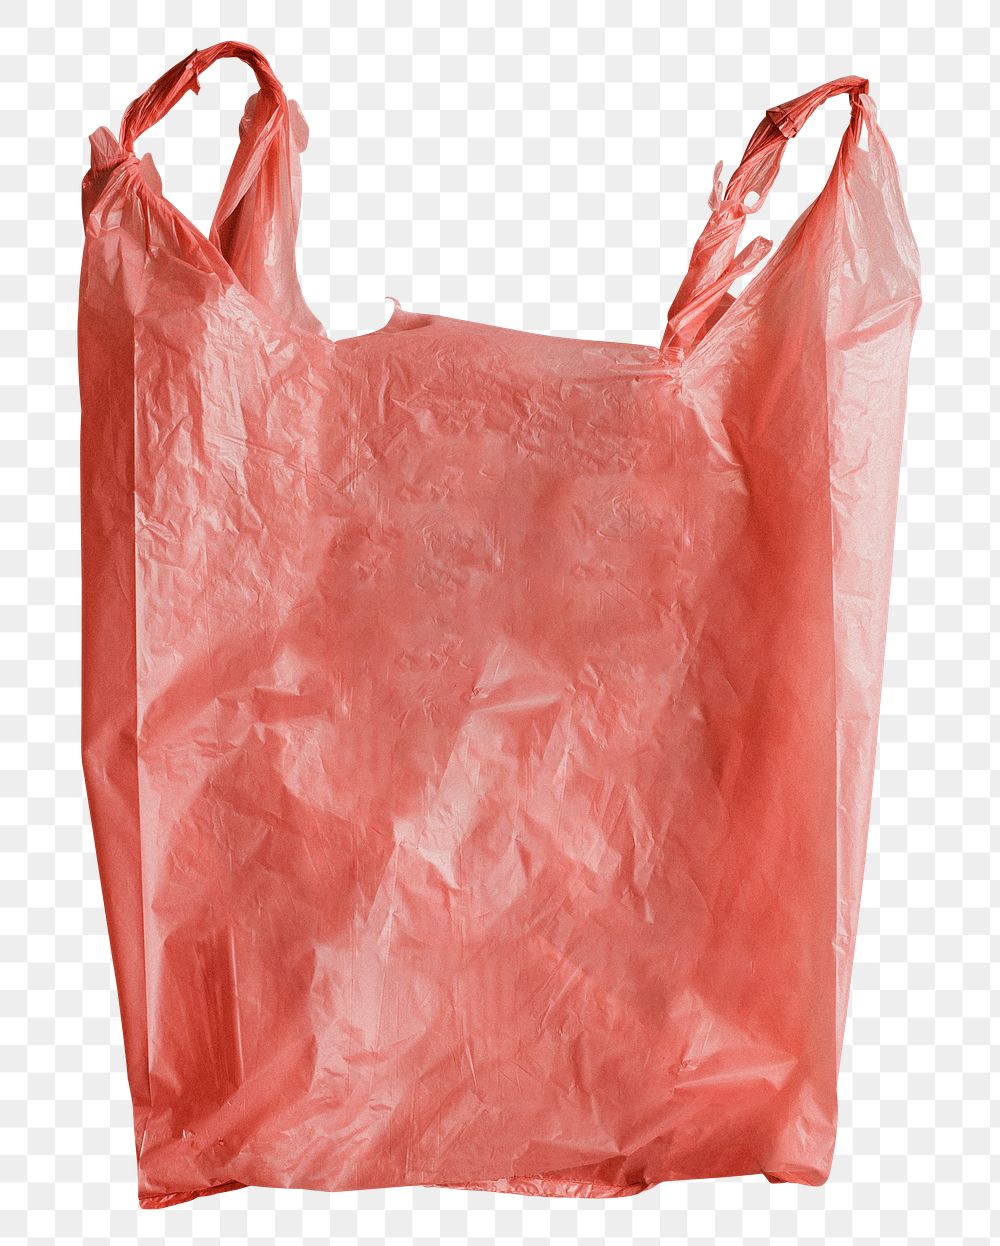 Plastic bag png sticker, red package transparent background